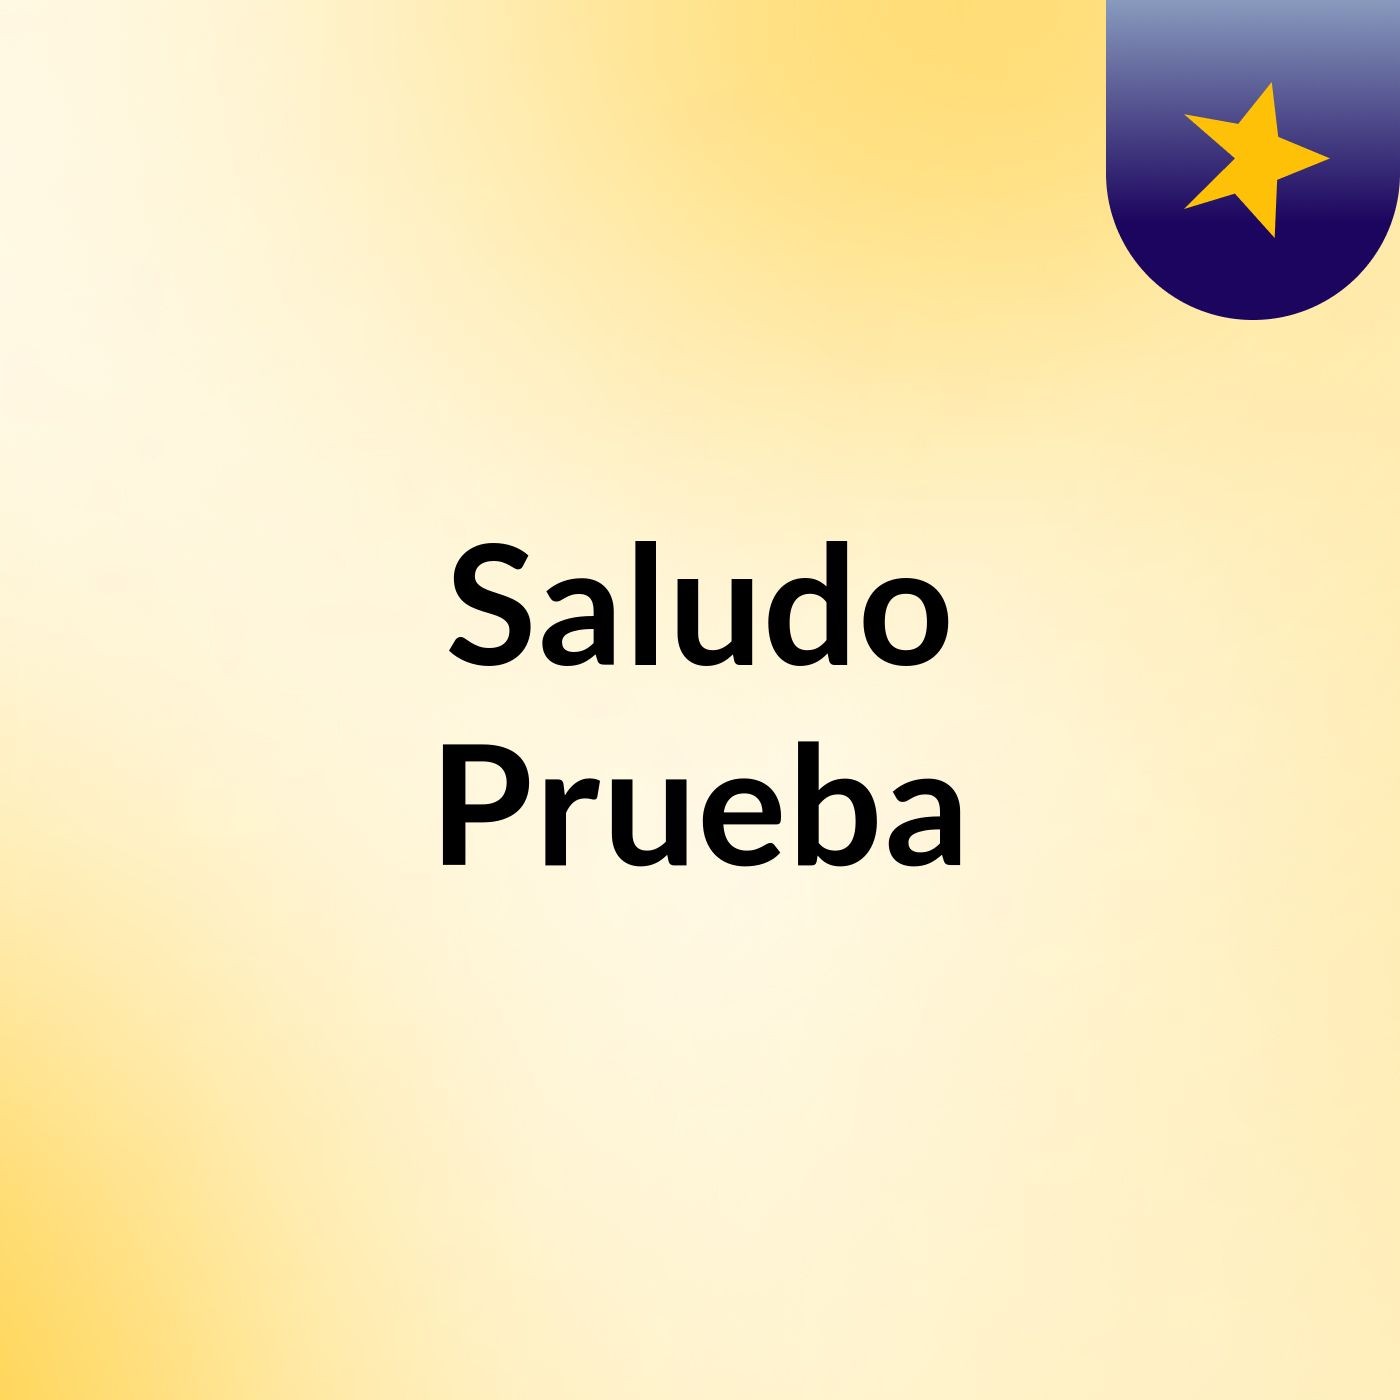 Saludo Prueba